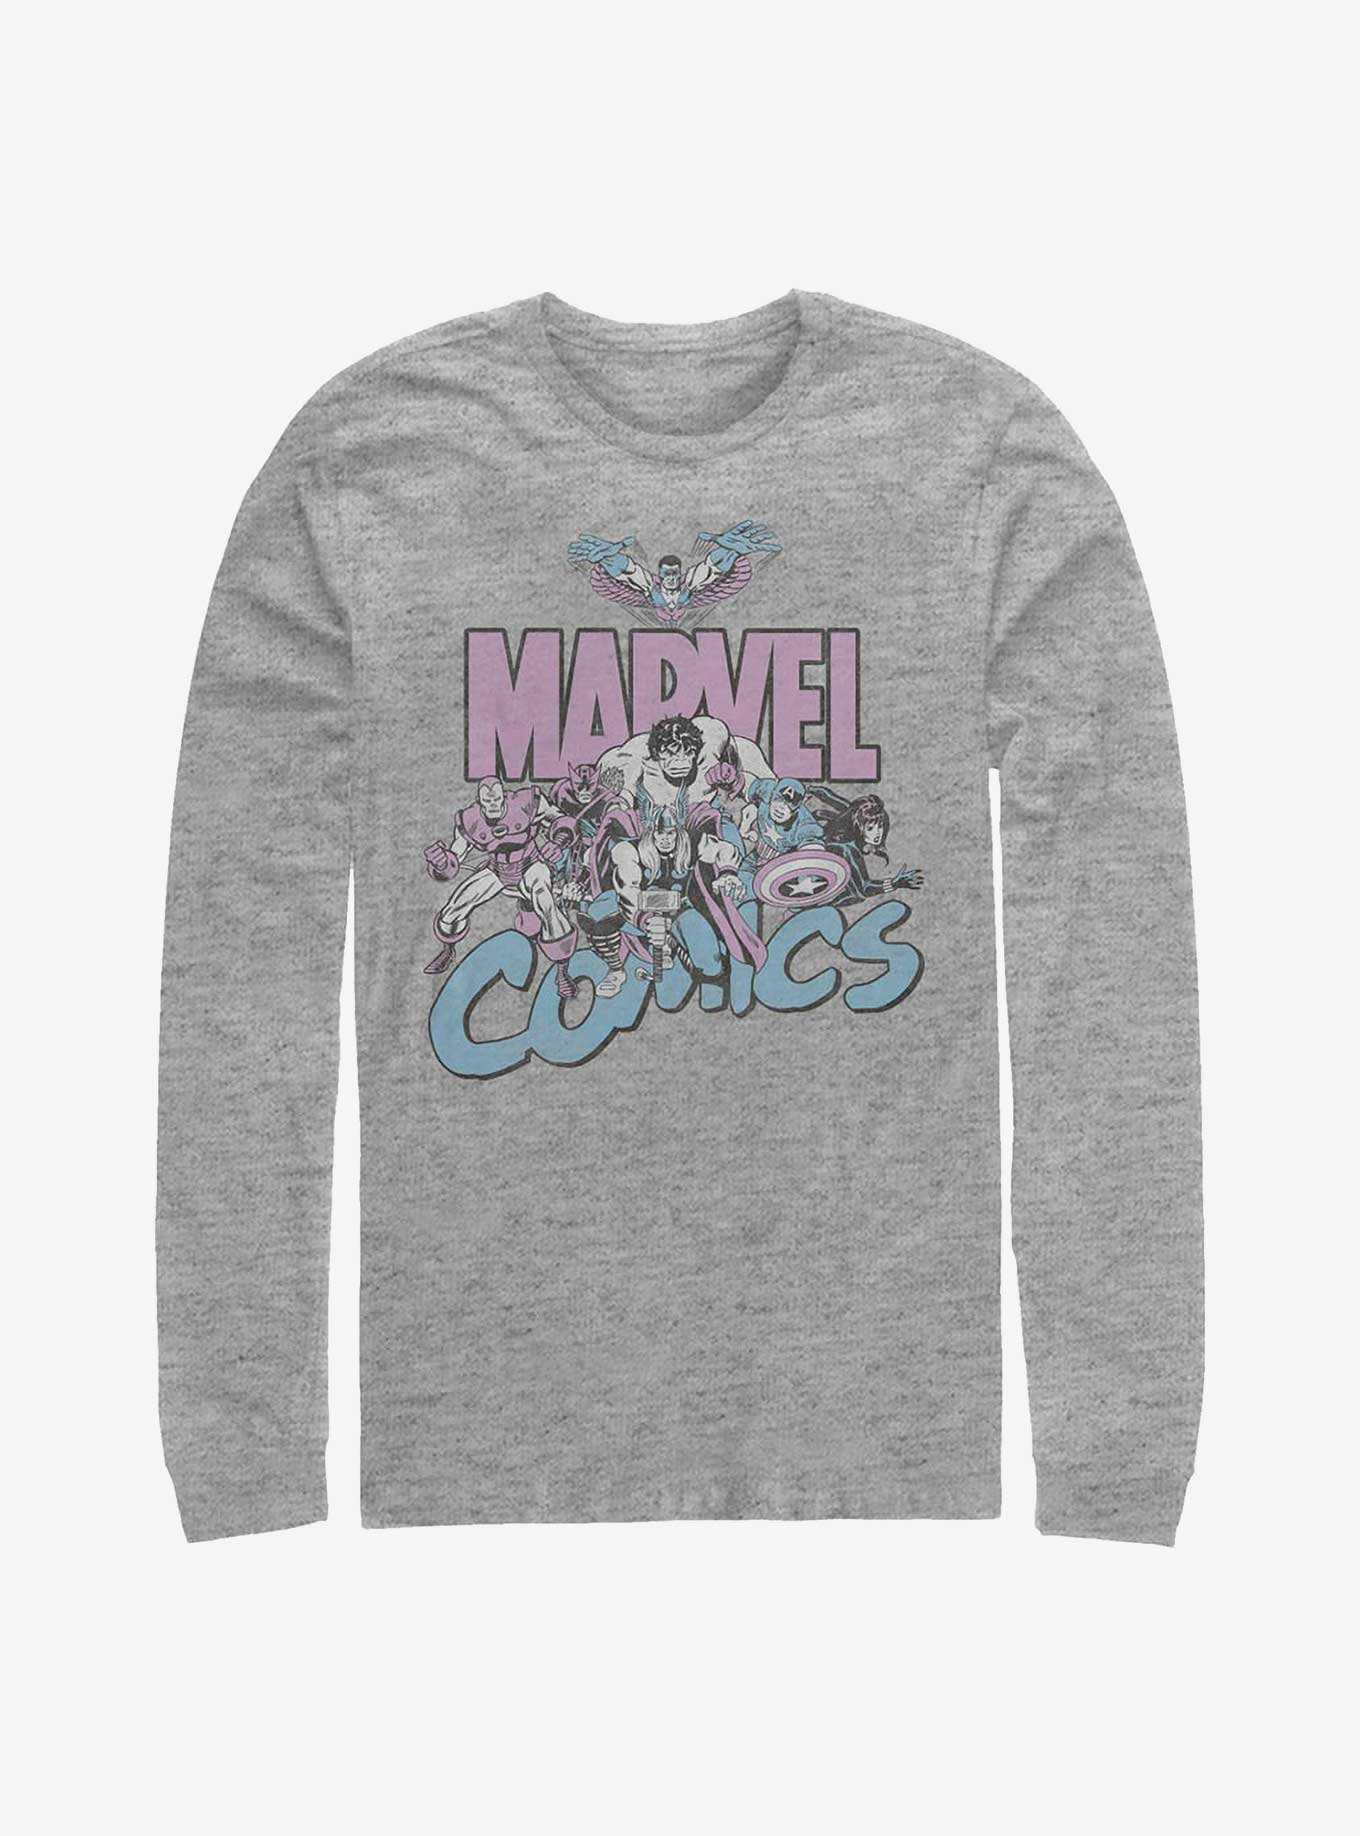 Marvel Avengers Group Long-Sleeve T-Shirt, ATH HTR, hi-res